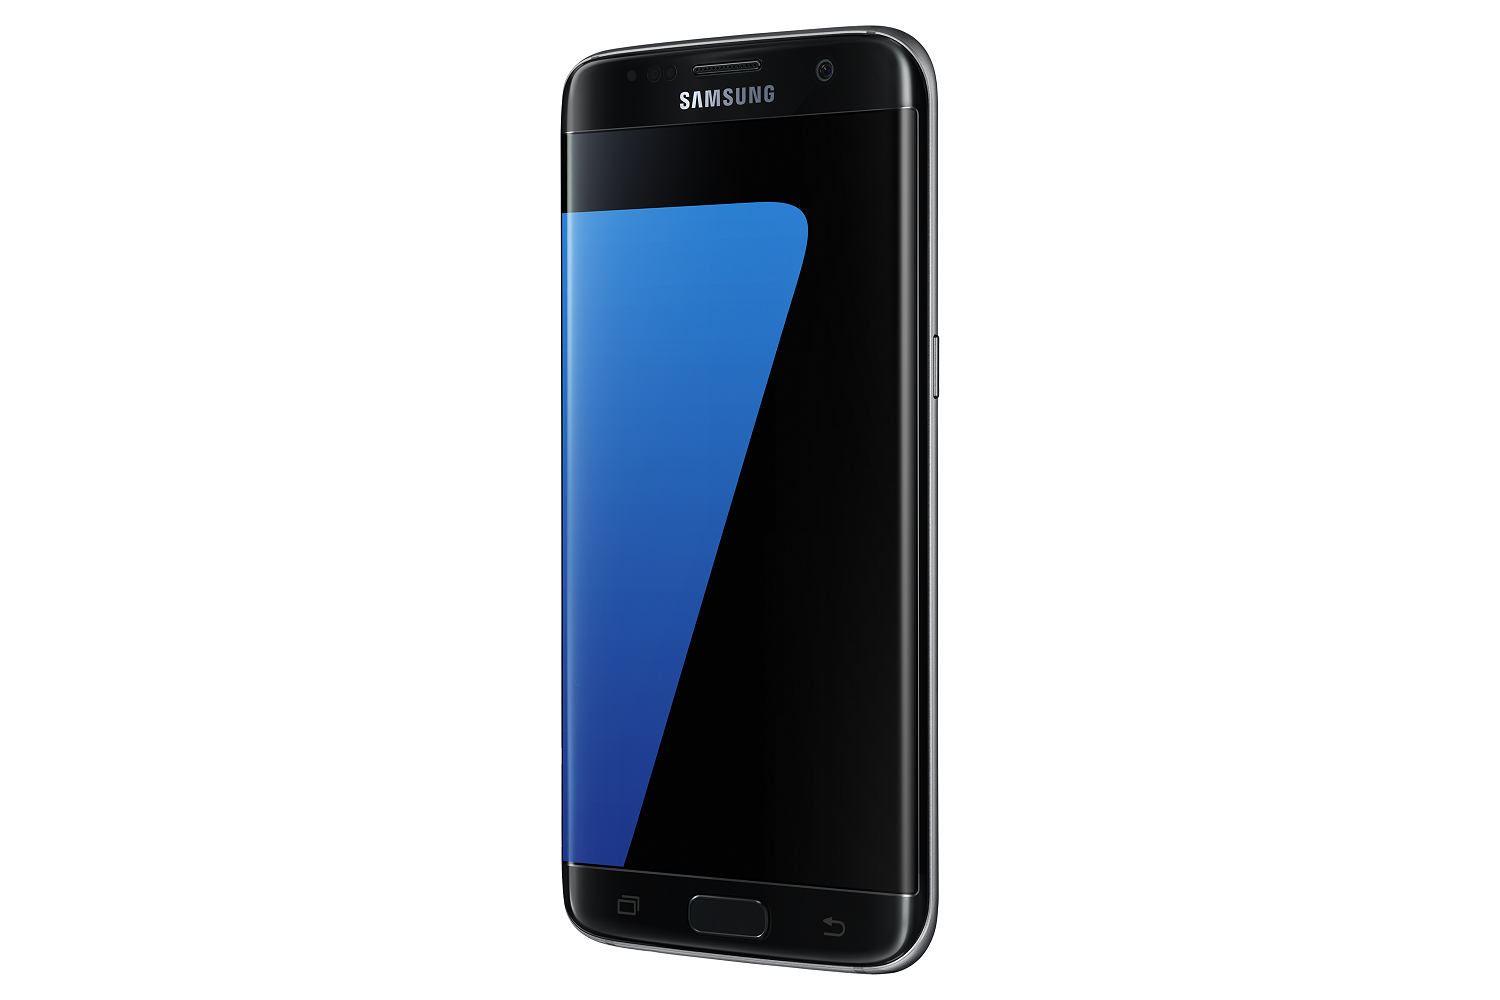 A Galaxy S7 edge 2016 legjobb telefonja